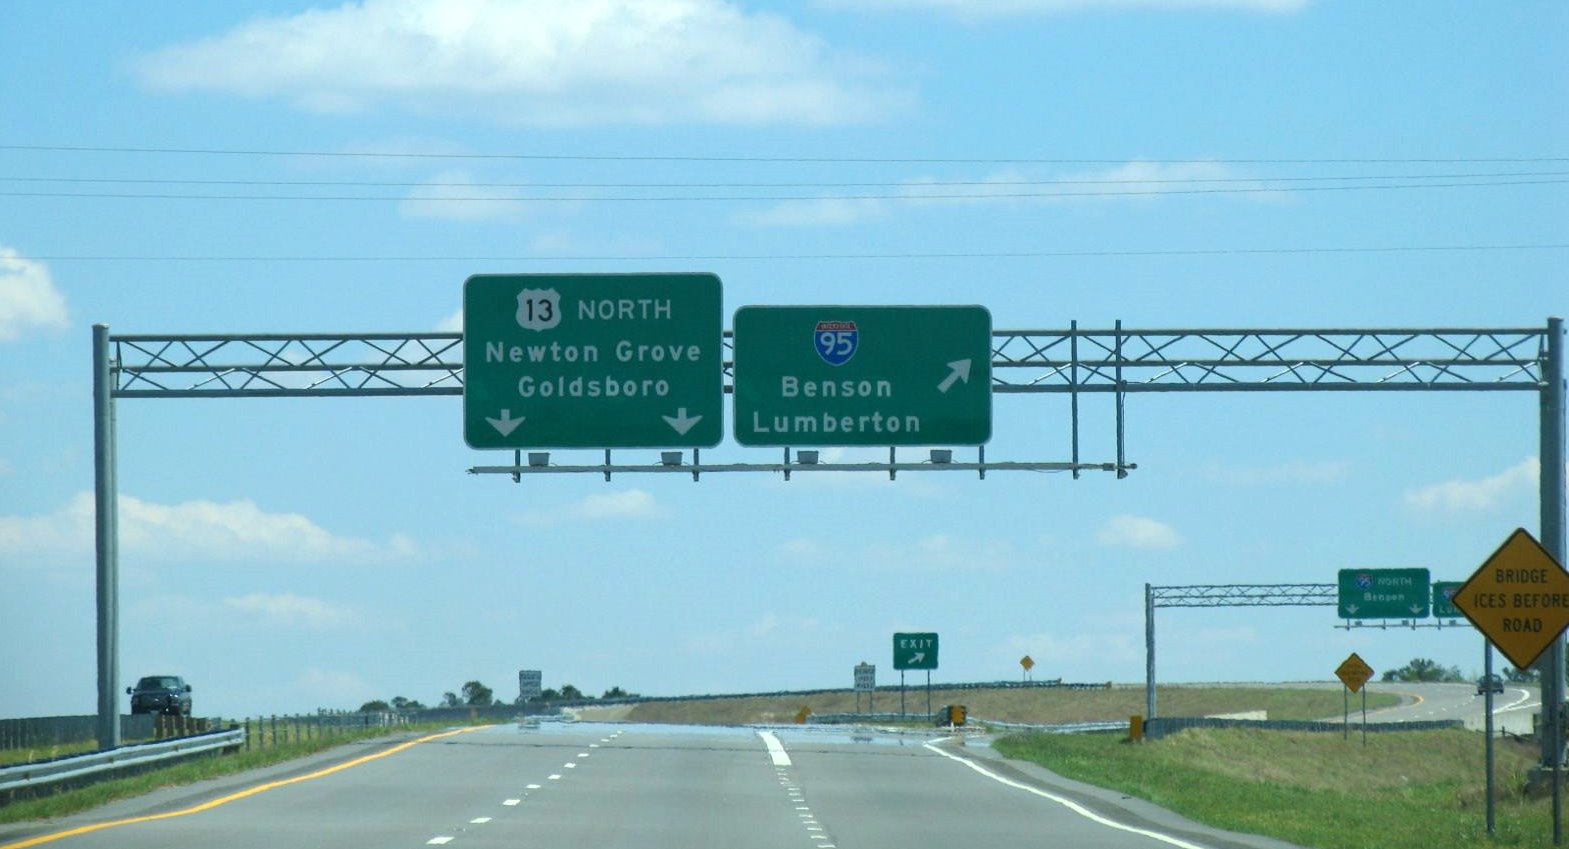 I-295 Fayetteville Outer Loop, I-95 interchange signage, image by Adam 
Prince.